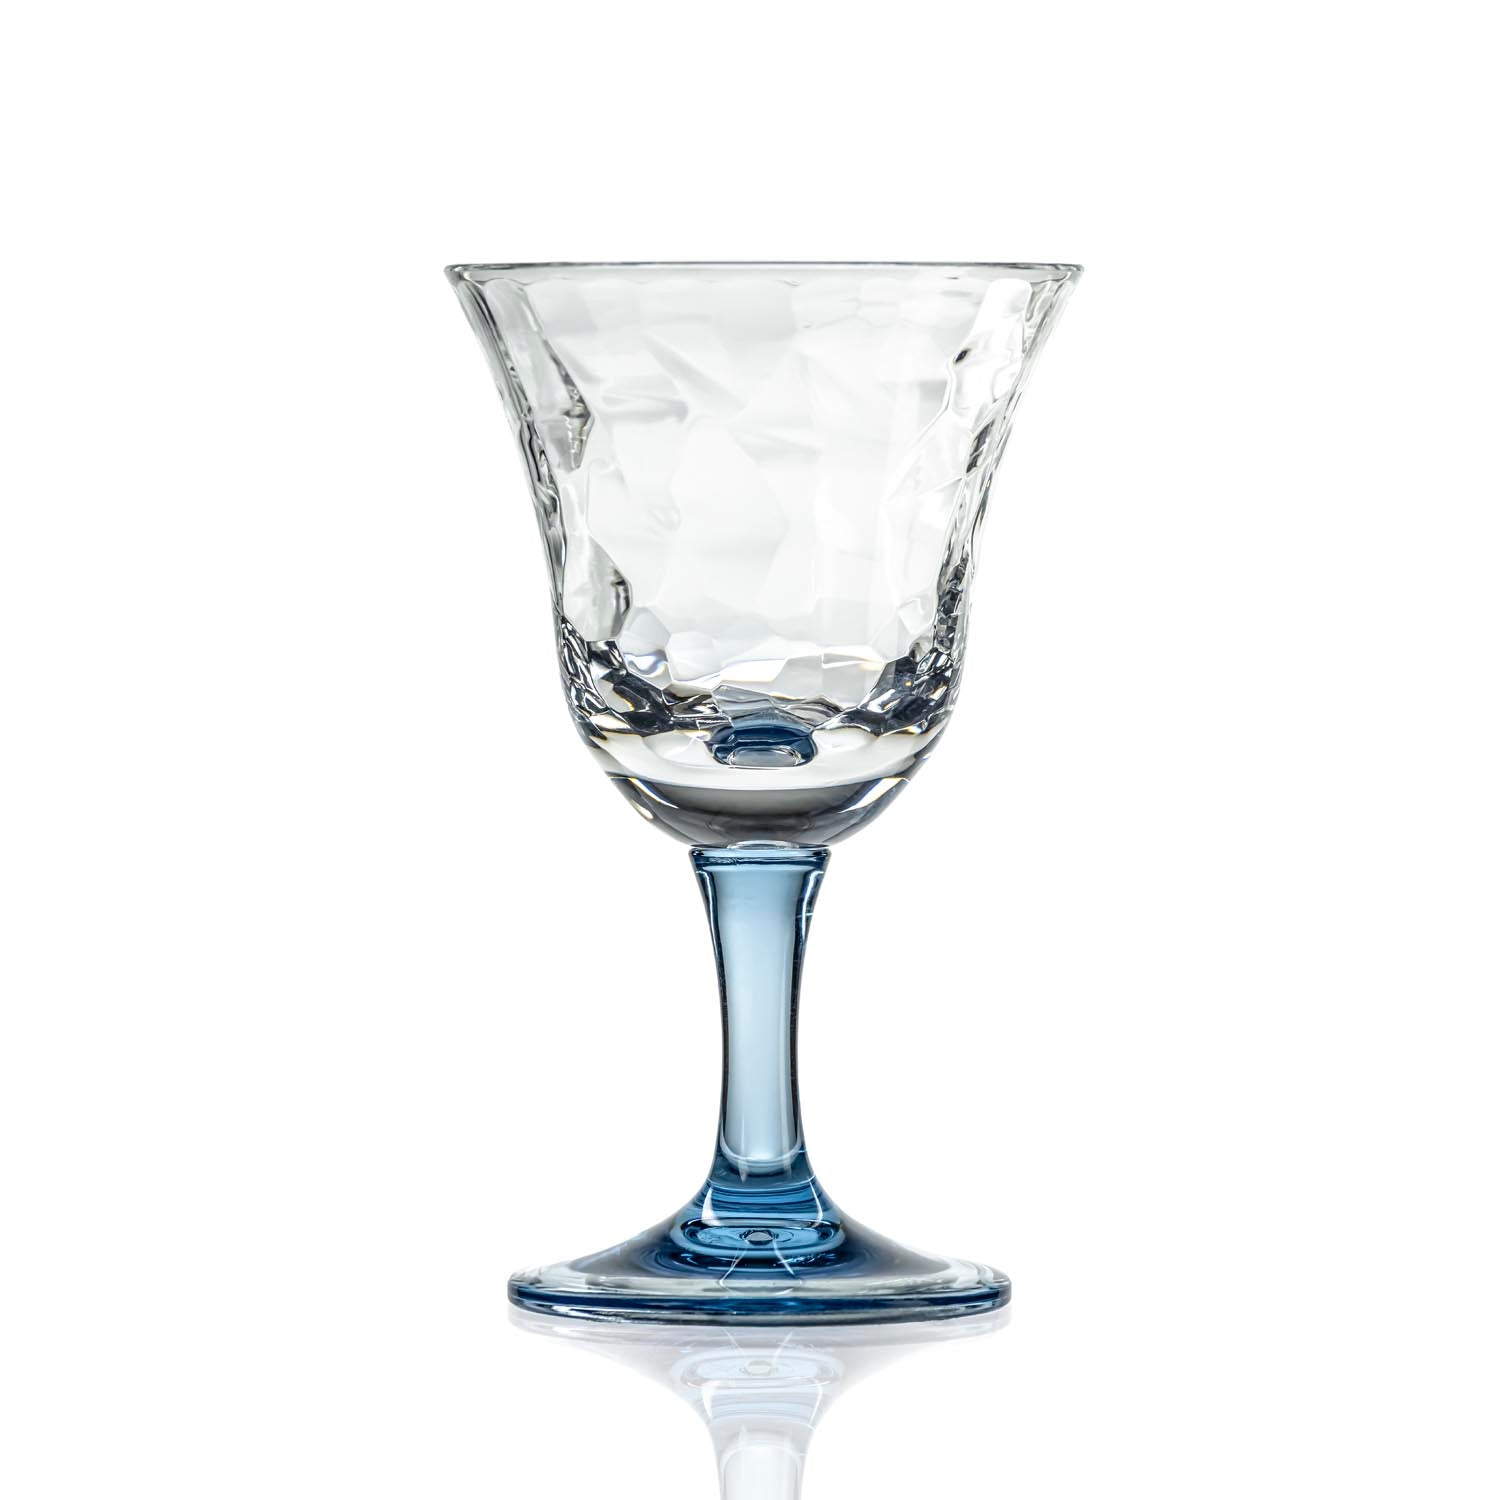 Merritt Designs Cascade Blue 12oz Acrylic Wine Stemware front view on a white background